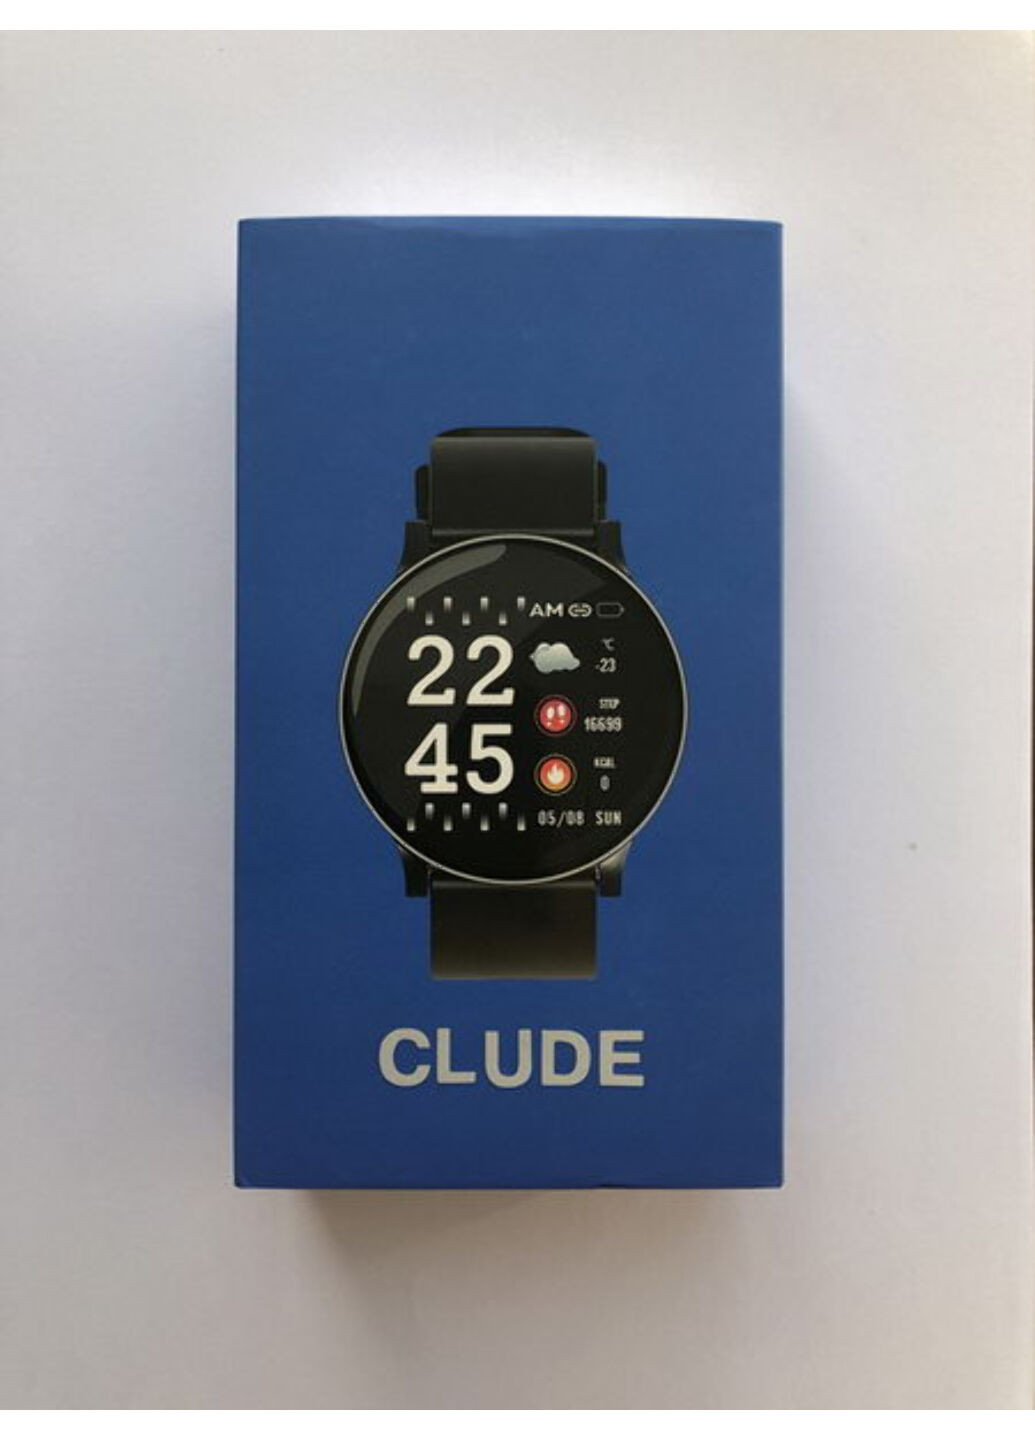 Смарт-годинник Clude swo1014b red (256650758)